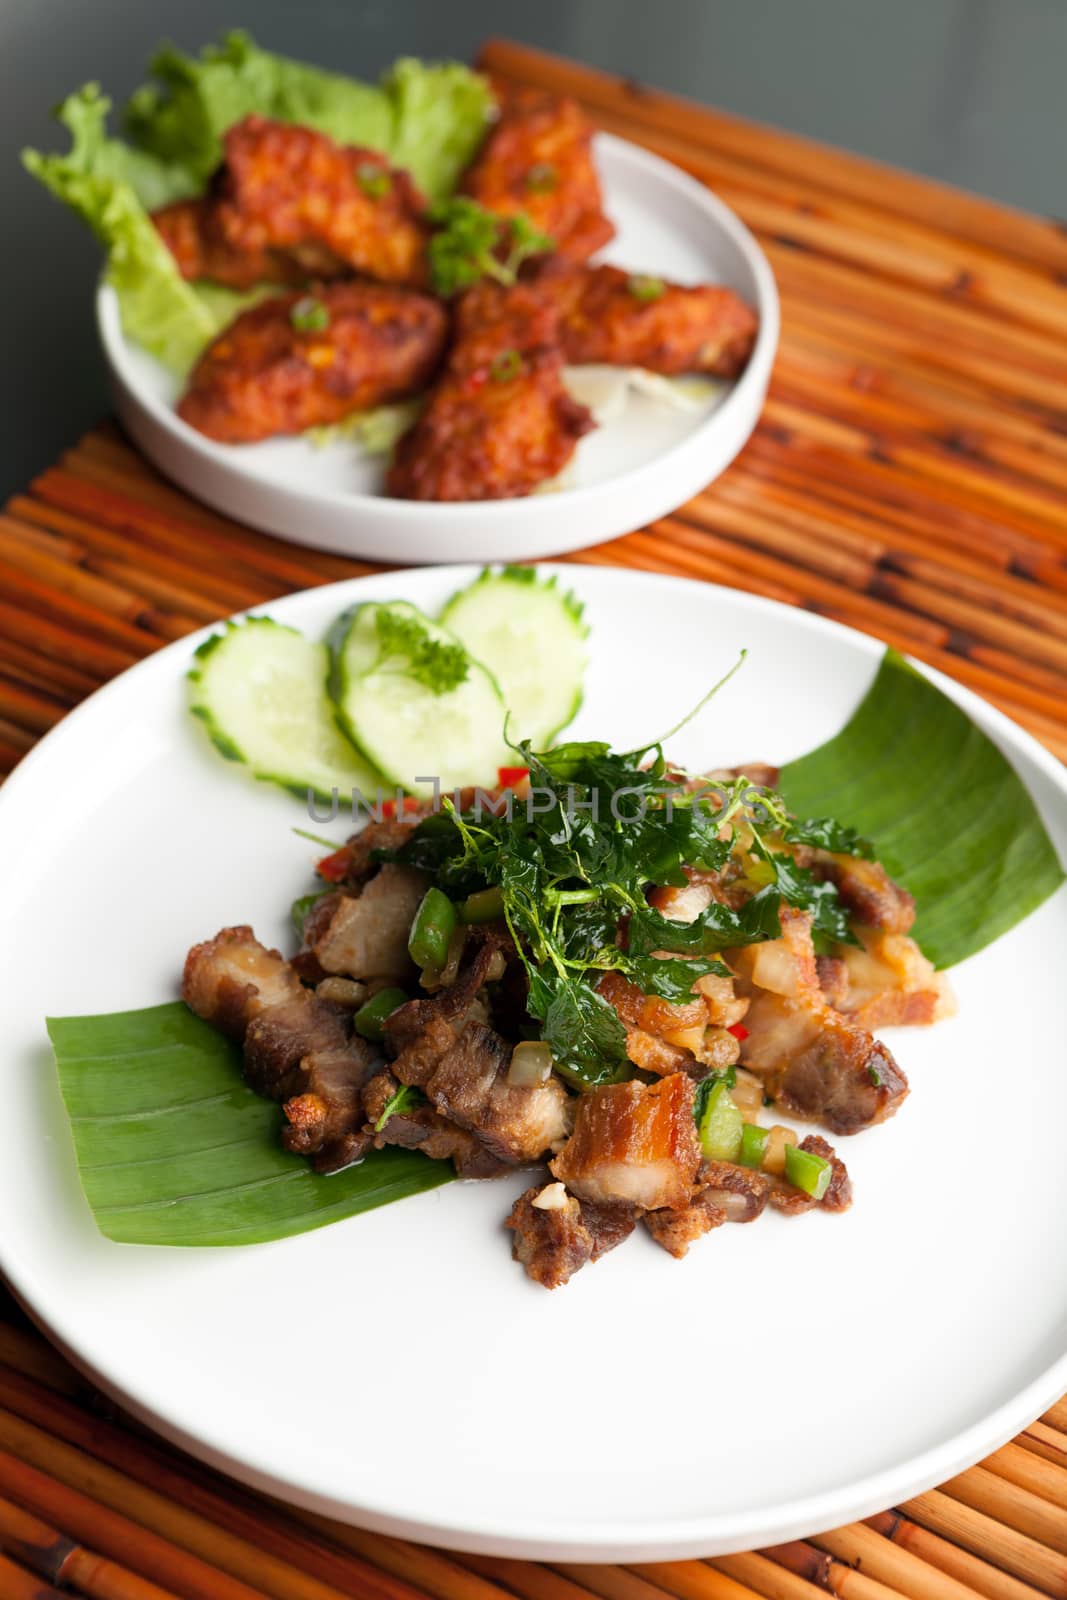 Traditional Thai crispy pork dish with green garnish.